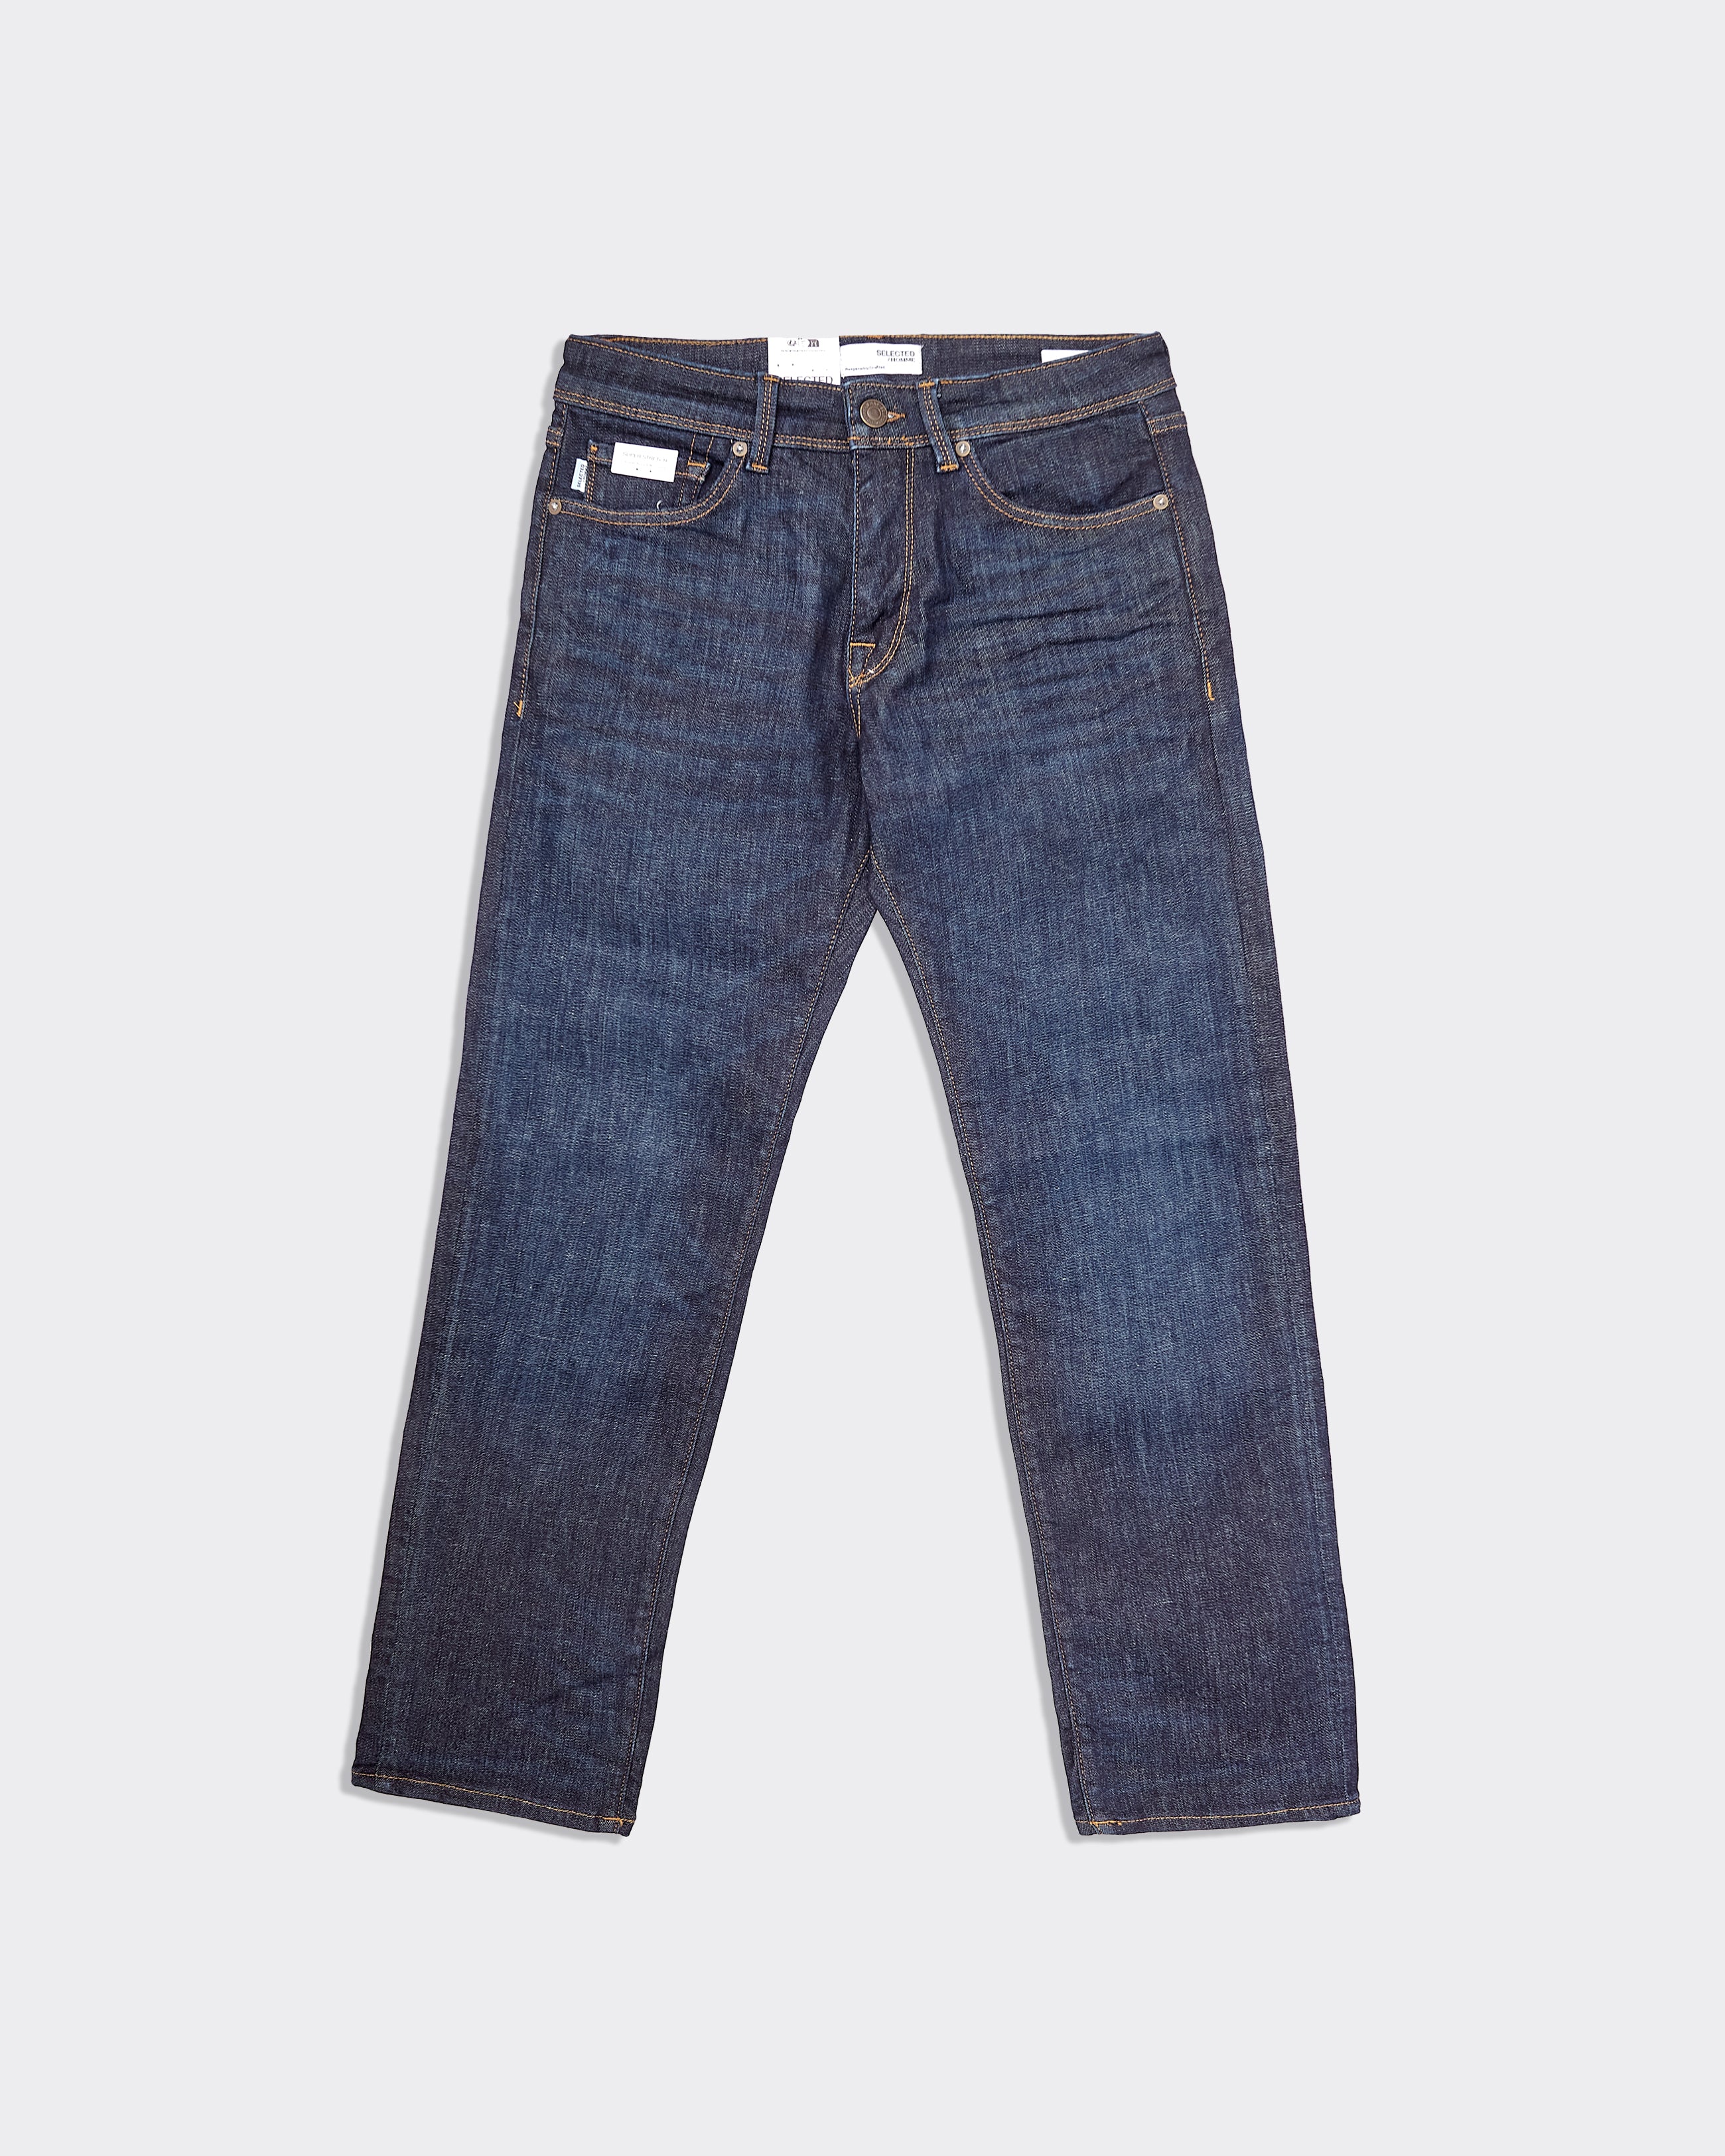 Scott 6291 Blue Jeans